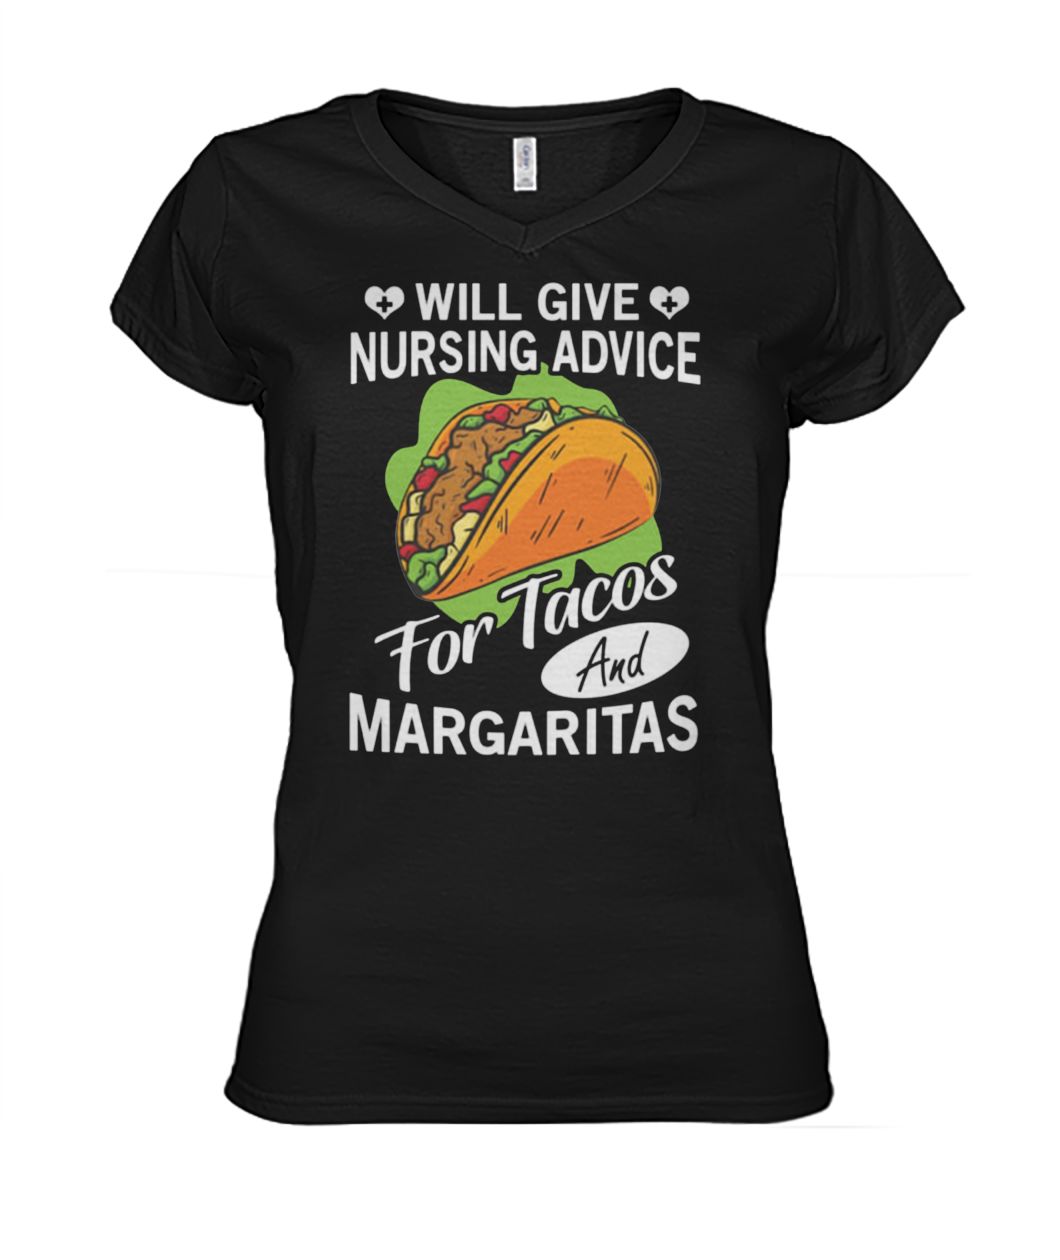 Will give nursing advice for tacos margaritas women's v-neck